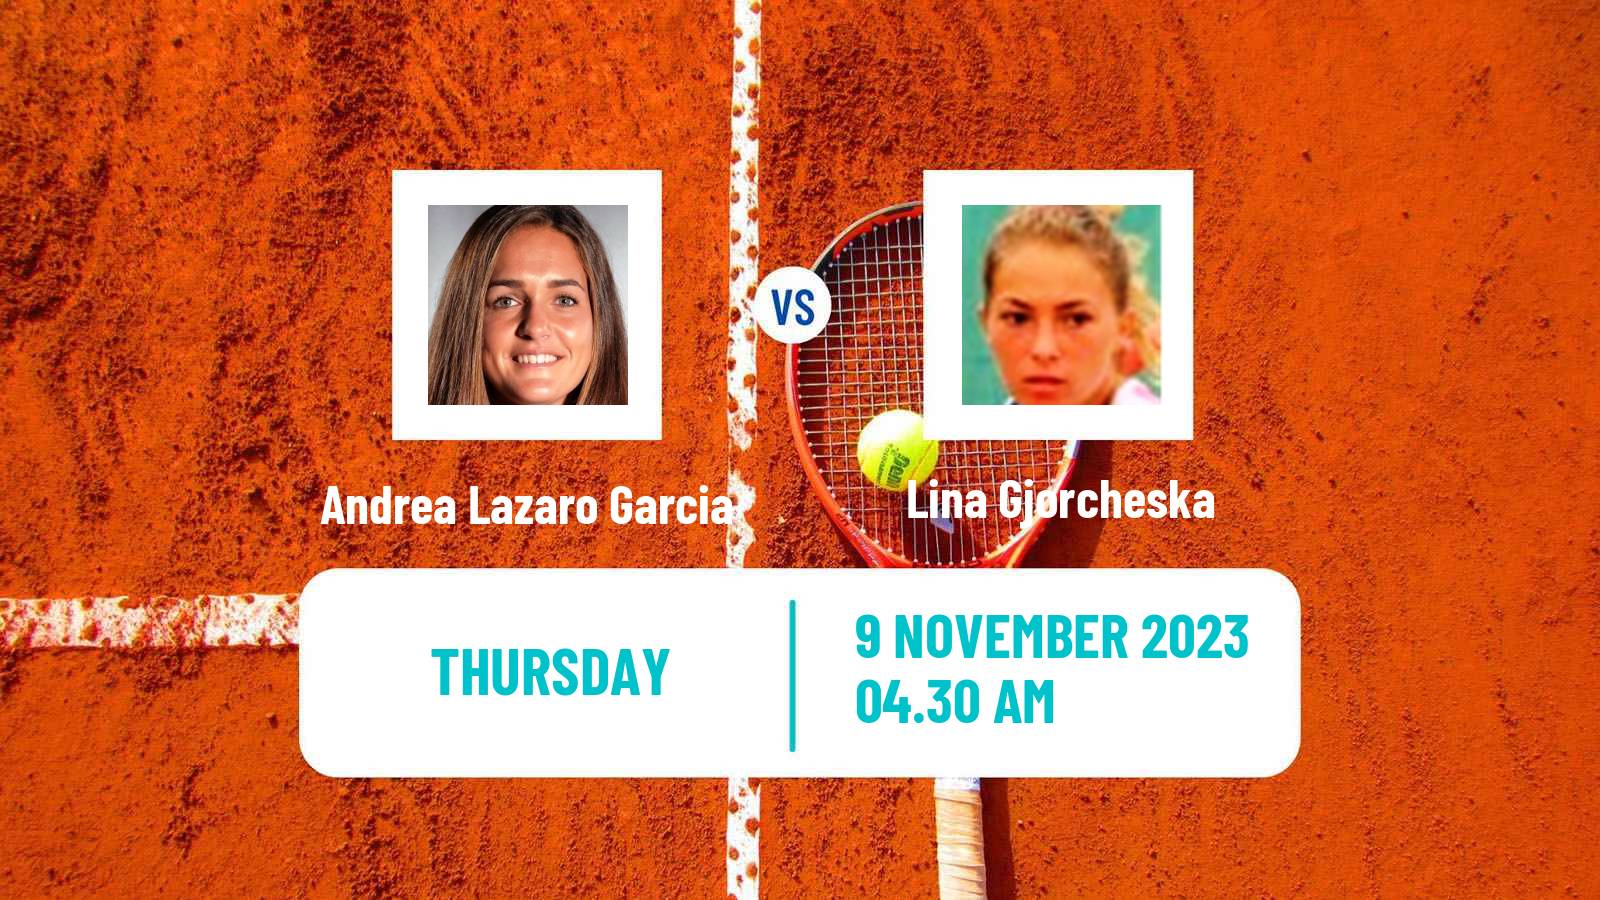 Tennis ITF W40 Heraklion 2 Women Andrea Lazaro Garcia - Lina Gjorcheska